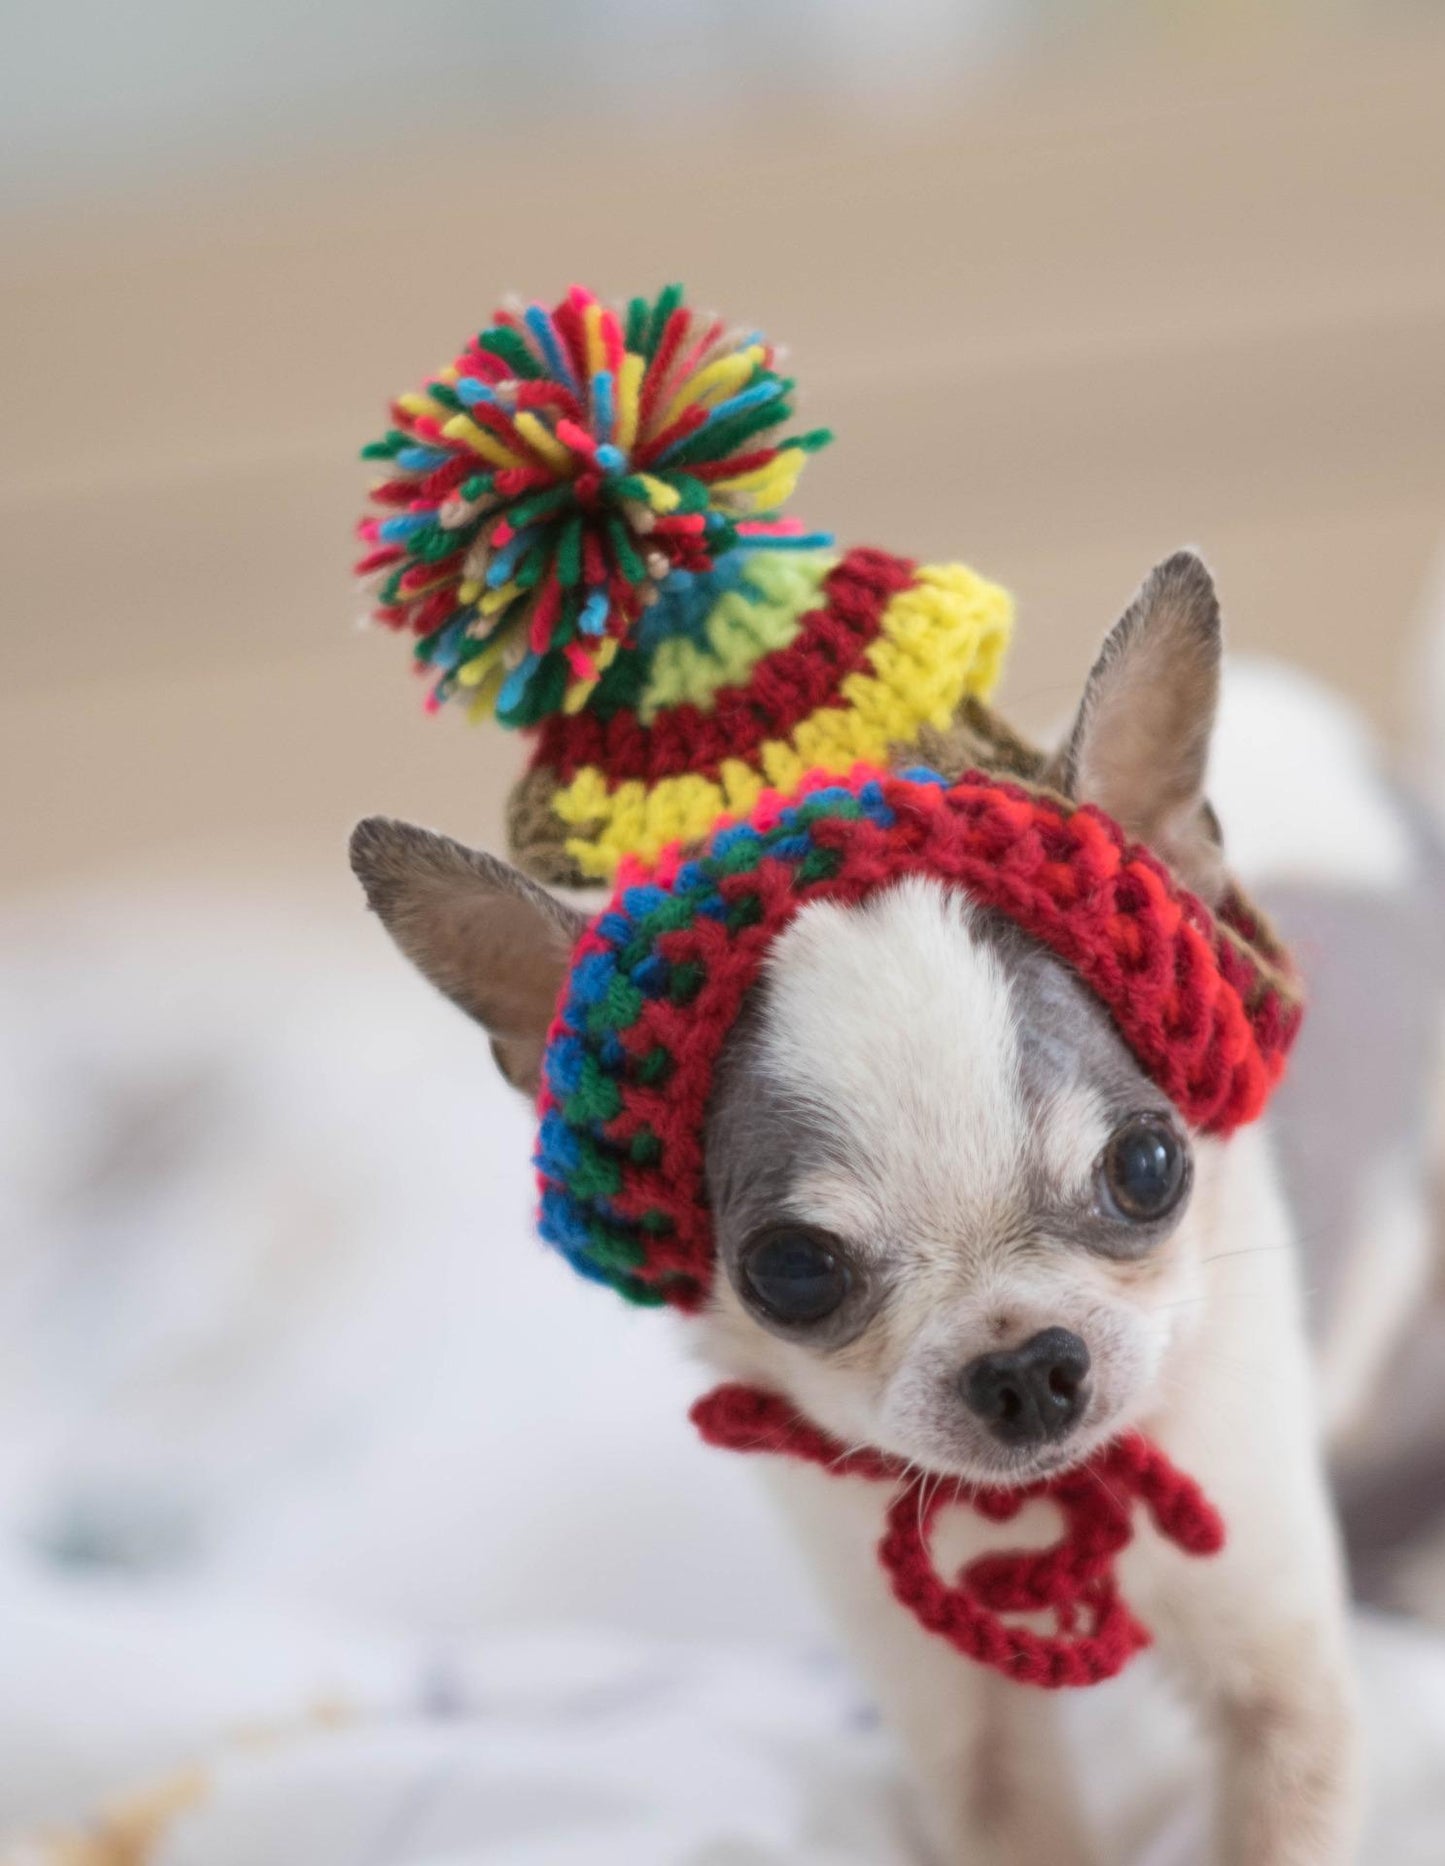 Cute little dog in a hat